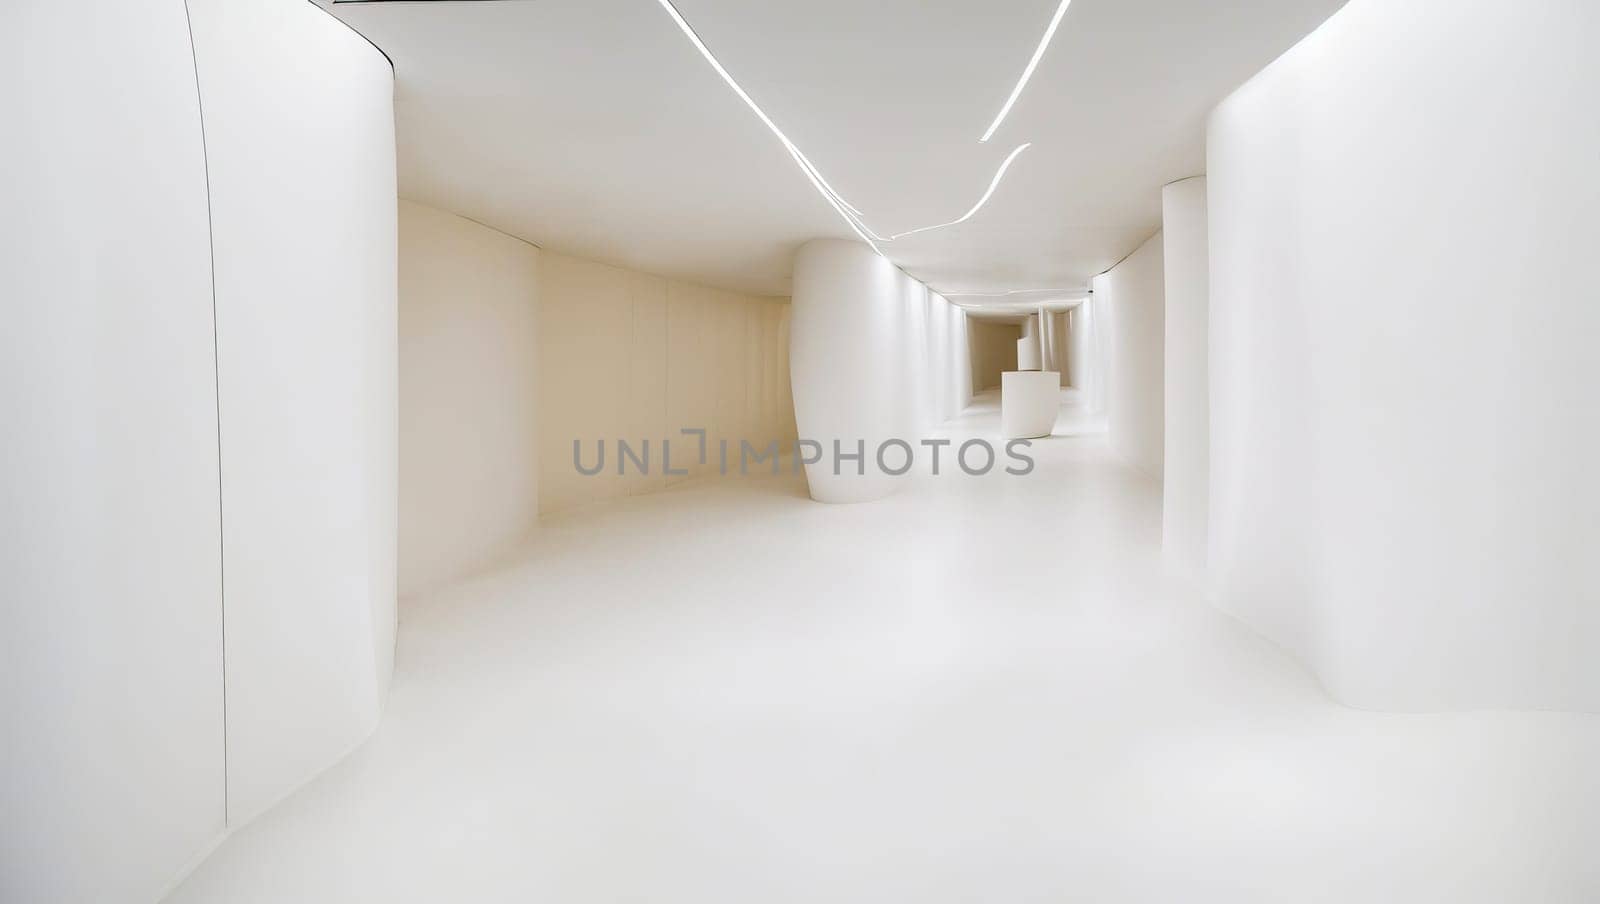 Inside a long tunnel of light. Futuristic architecture. AI generated